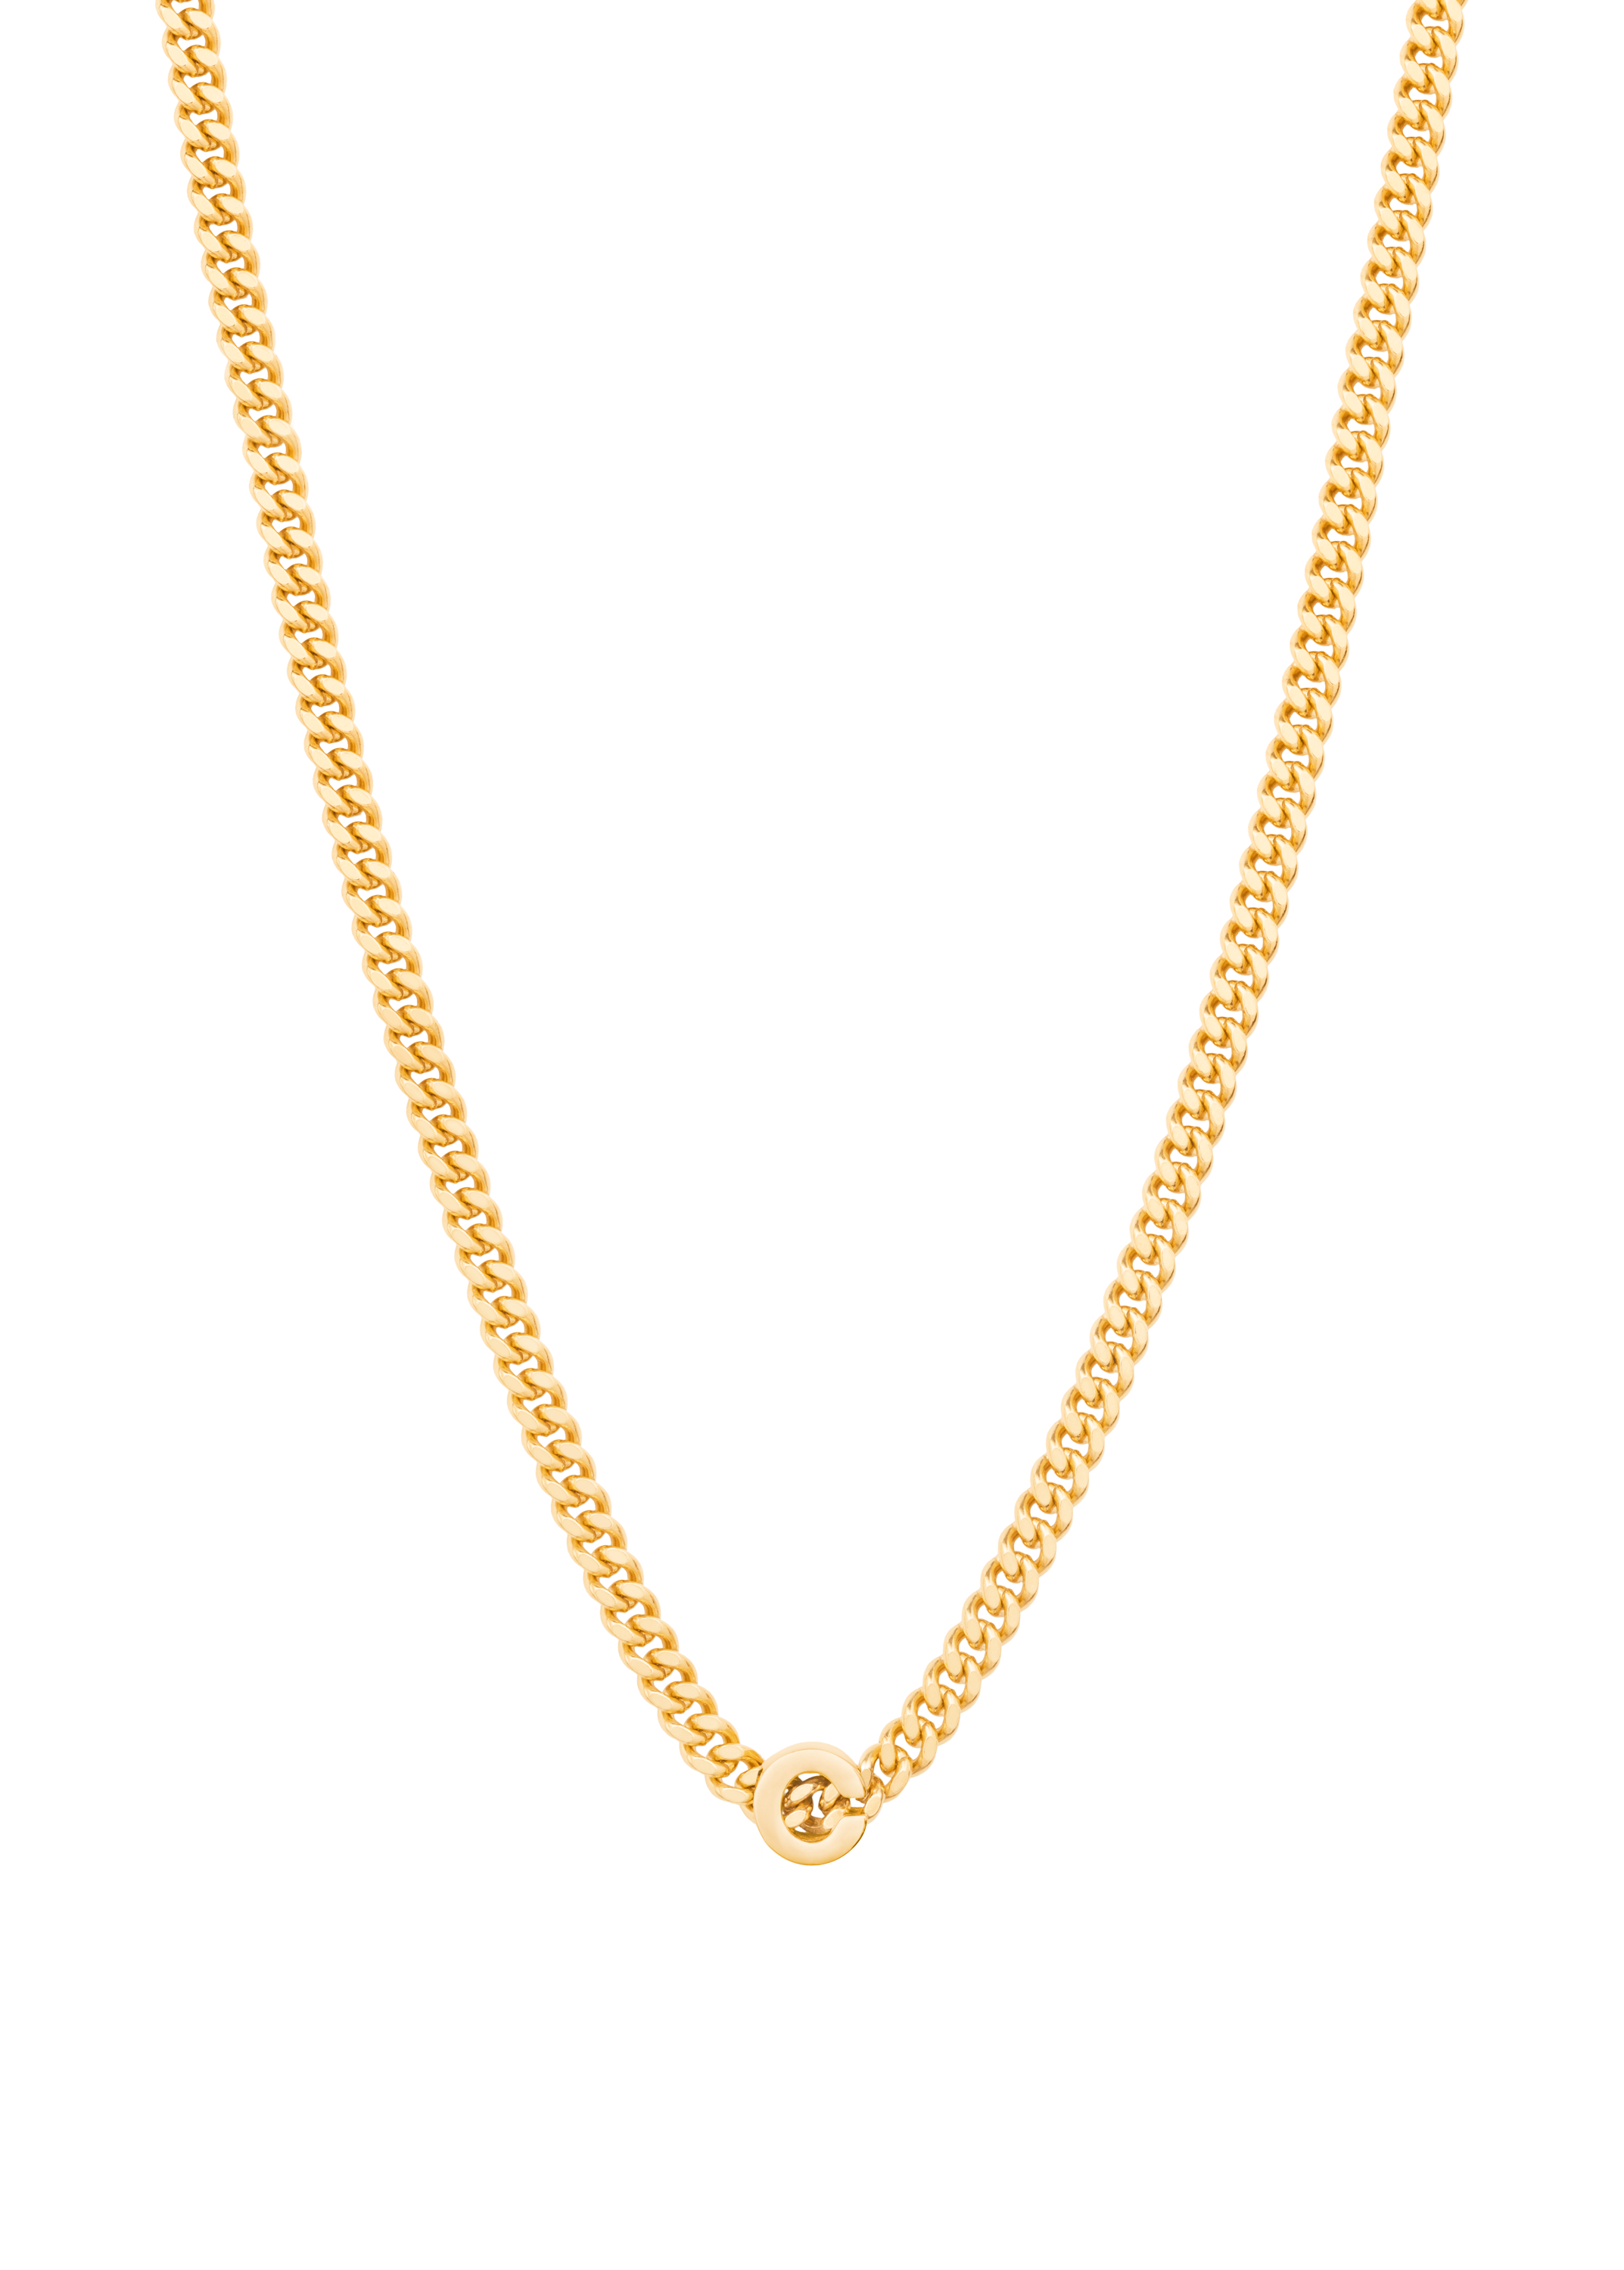 alphabet necklace with pendant C